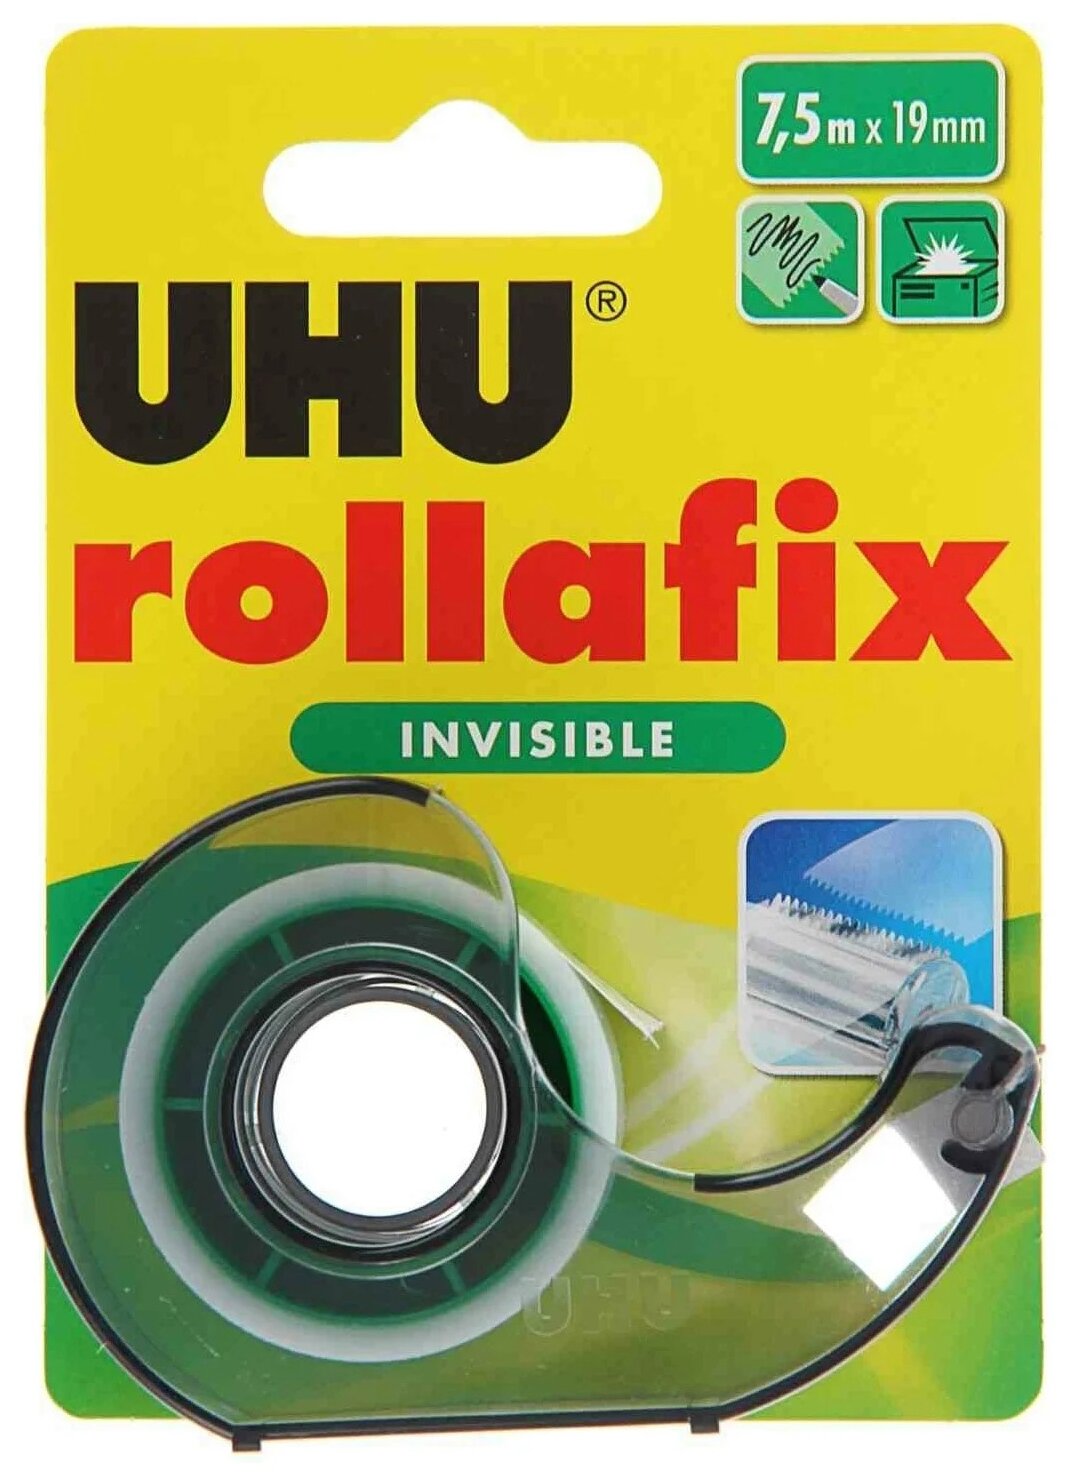   UHU ROLLAFIX INVISIBLE  19*7.5   